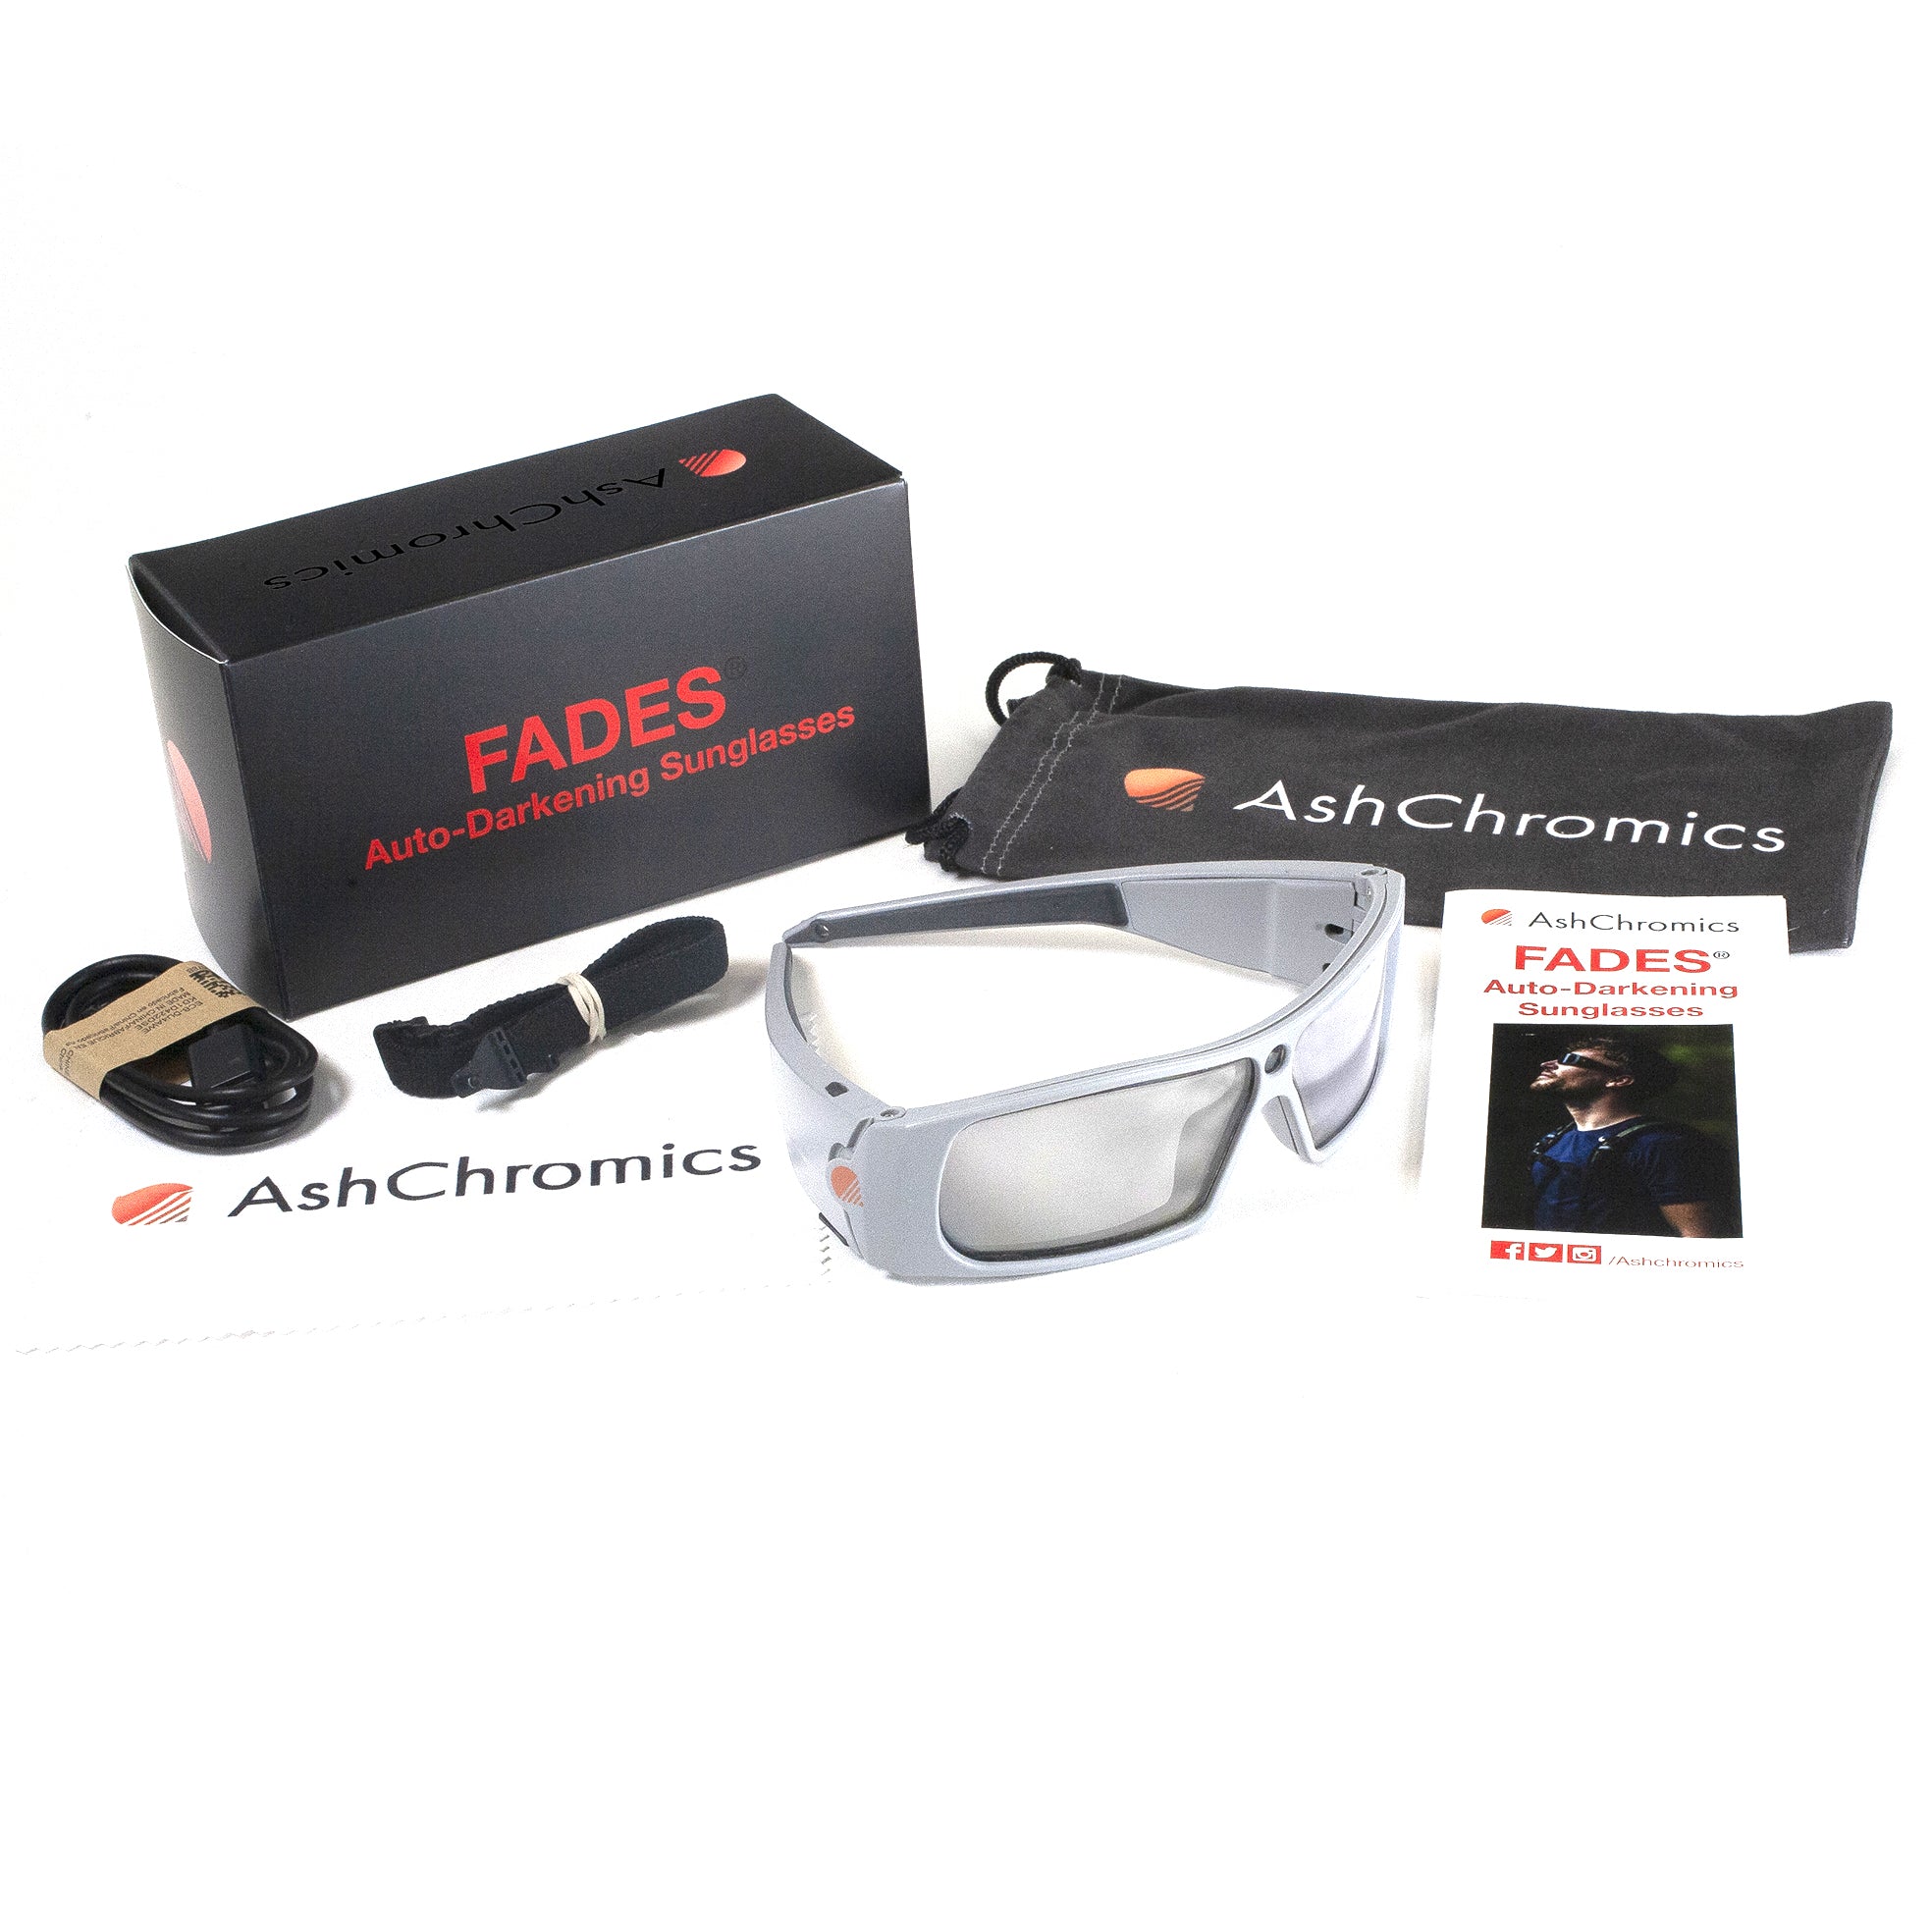 AshChromics Auto Darkening Biking Sunglasses Package